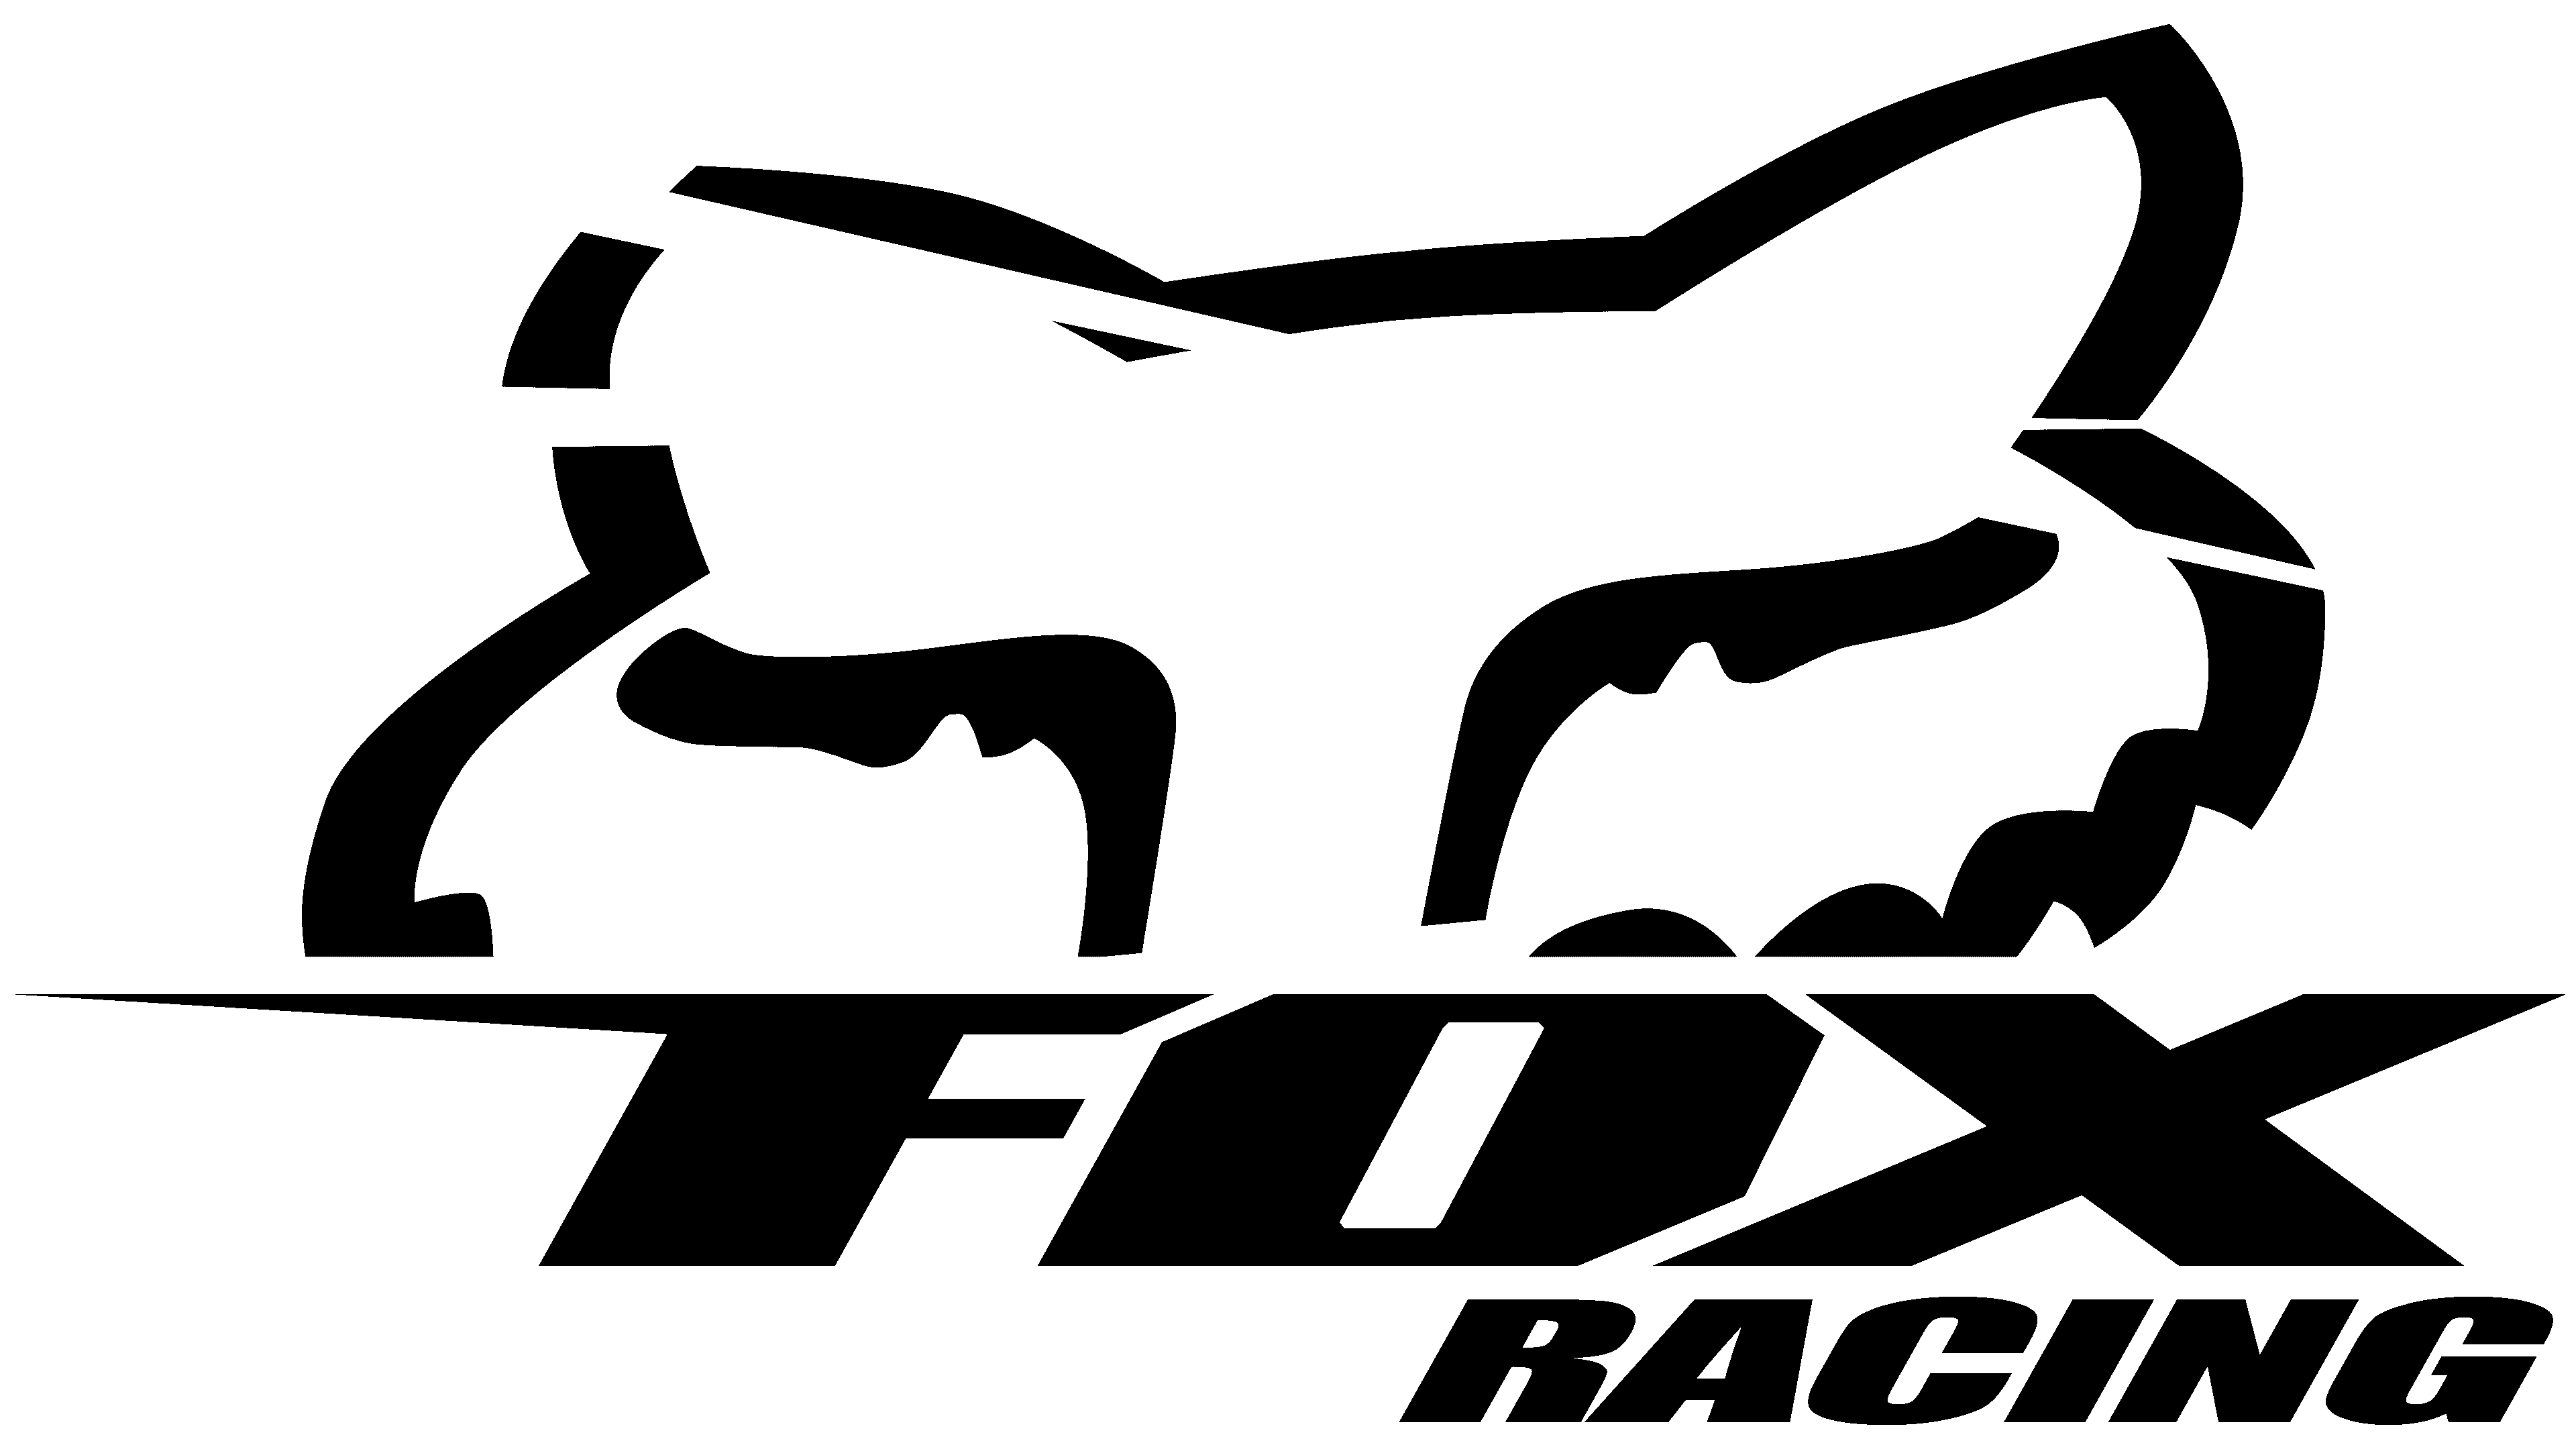 fox racing logo meaning